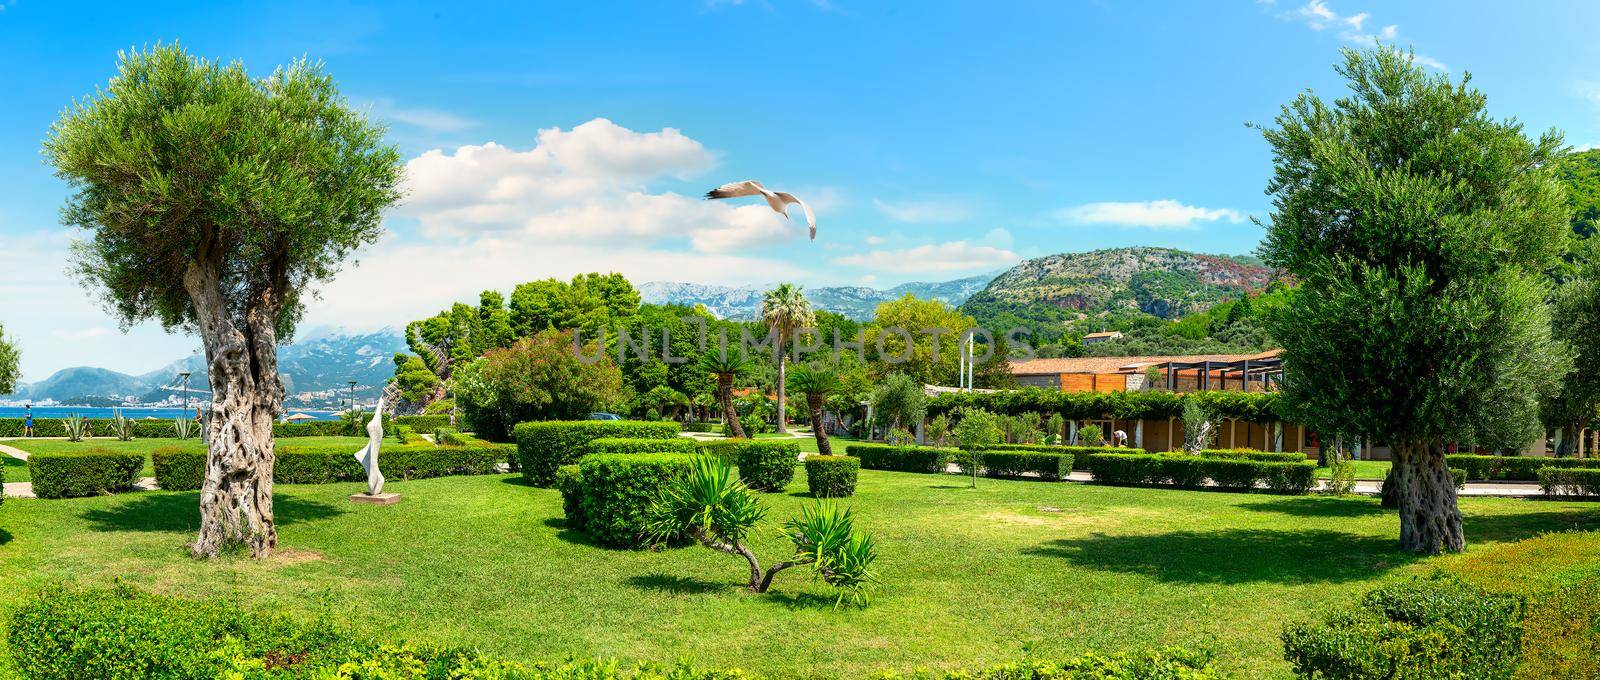 Park near the island of Sveti Stefan